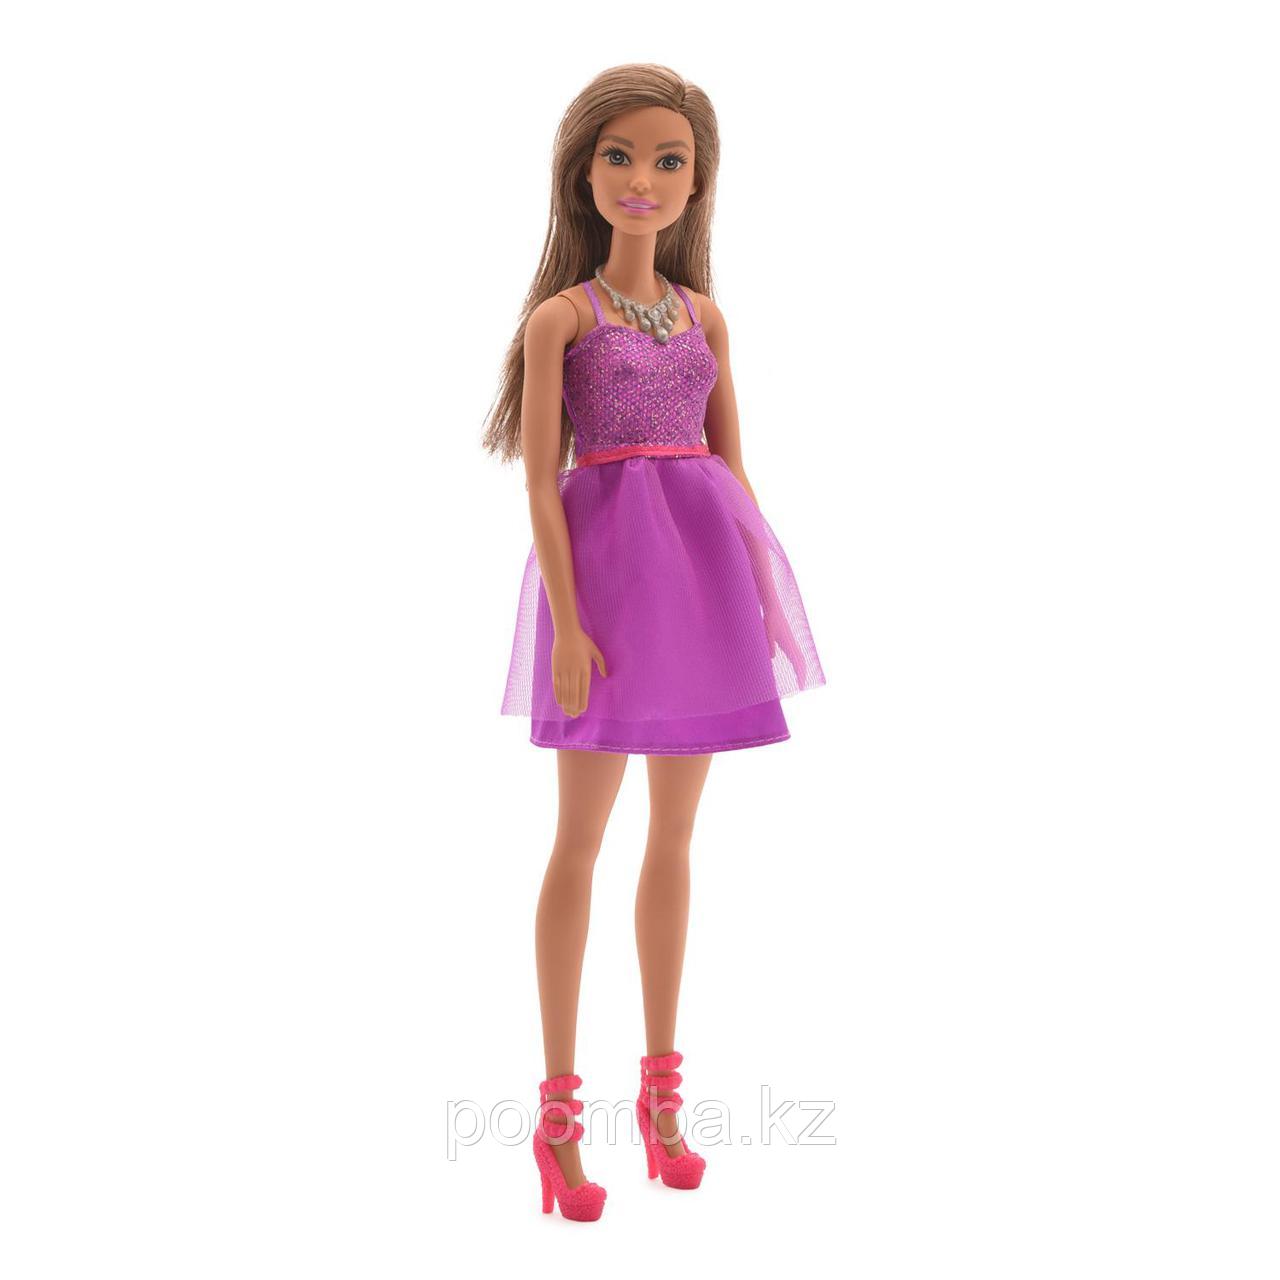 Кукла Barbie серии Сияние моды